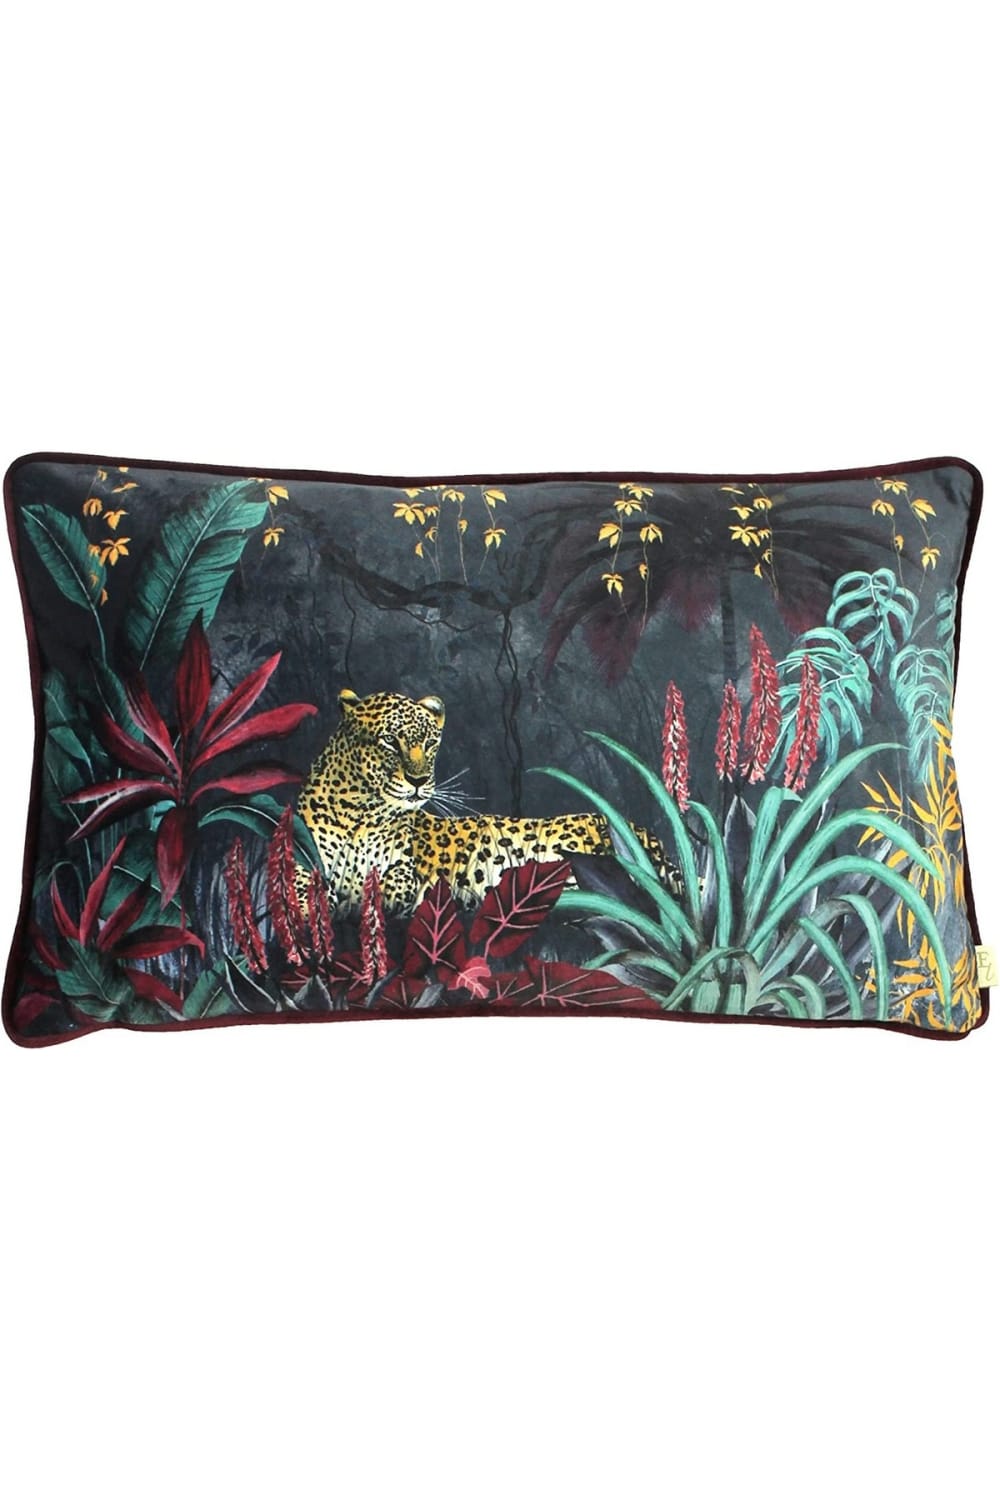 Evans Lichfield Zinara Leopard Throw Pillow Cover (Multicolored) (30cm x 50cm)